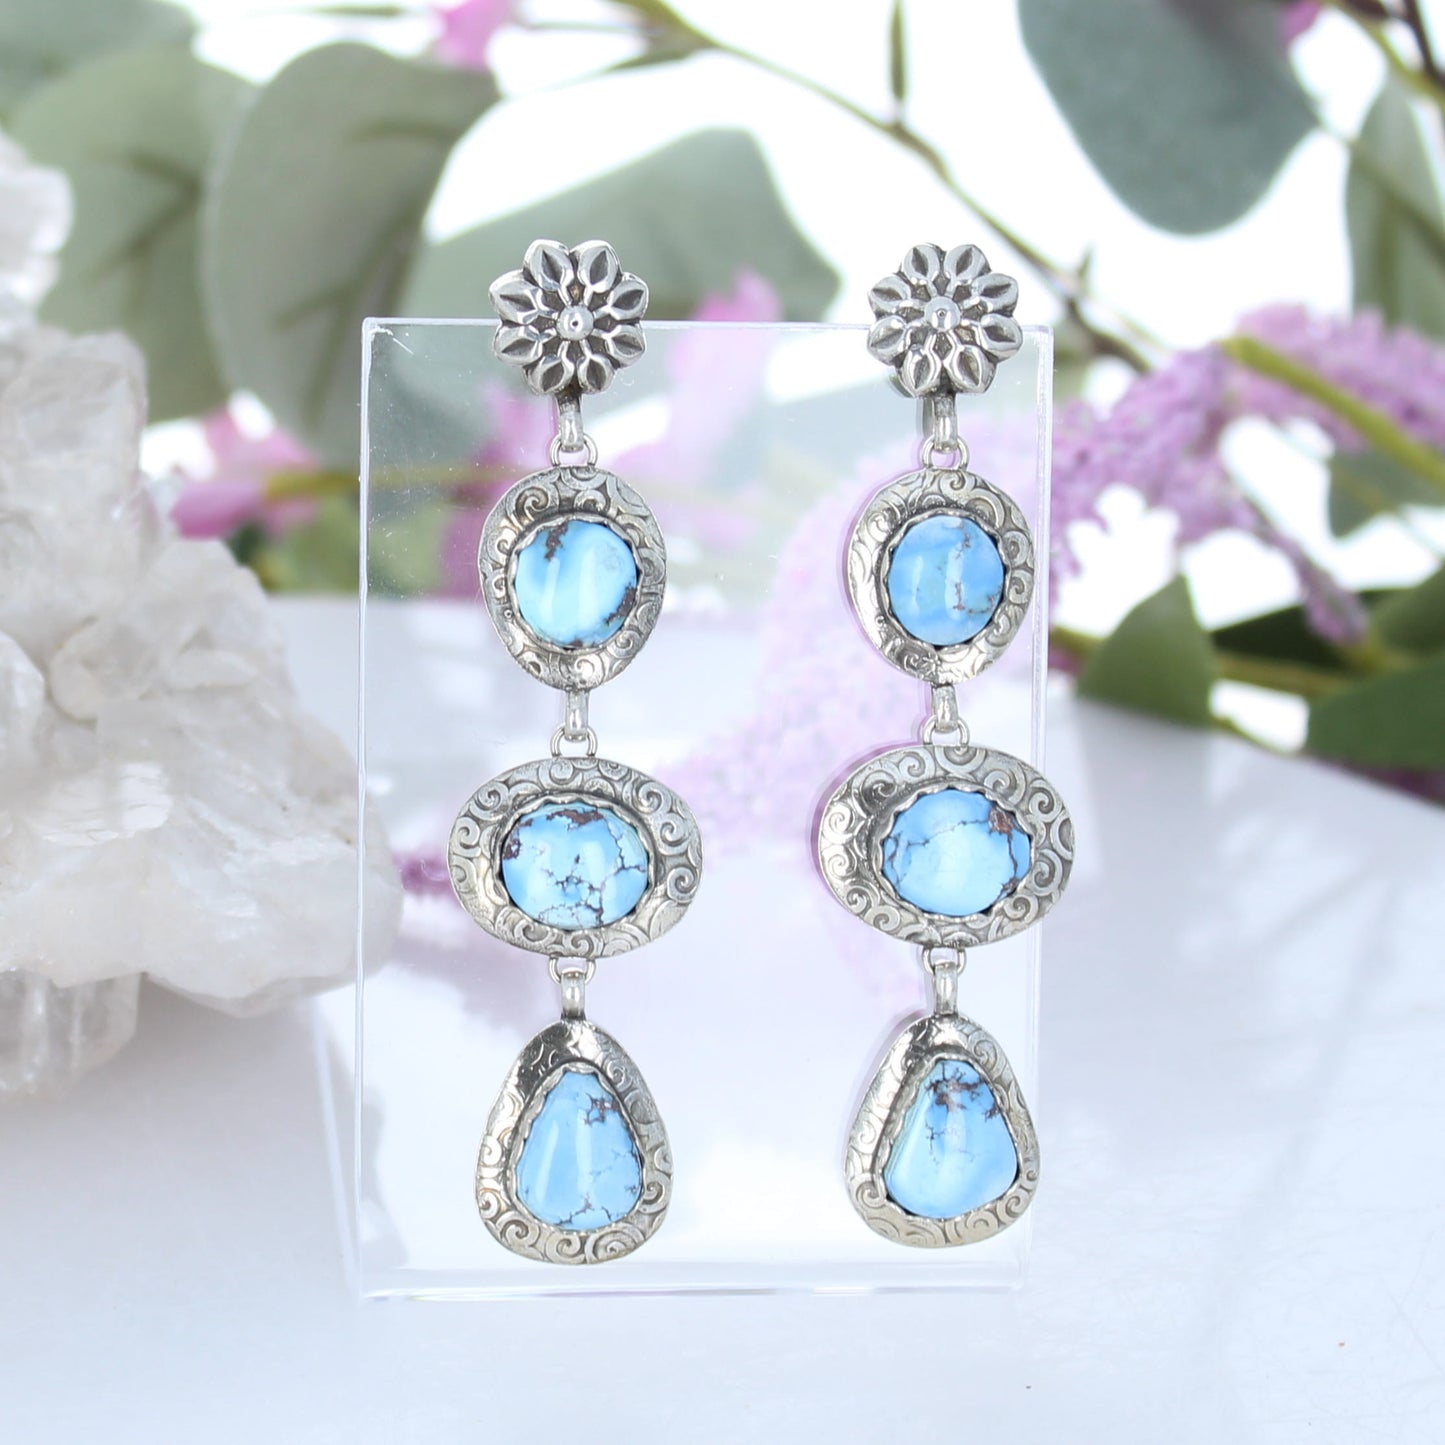 Kazakhstan Turquoise Earrings 3 Stone Baby Blue Spiral Design 3"